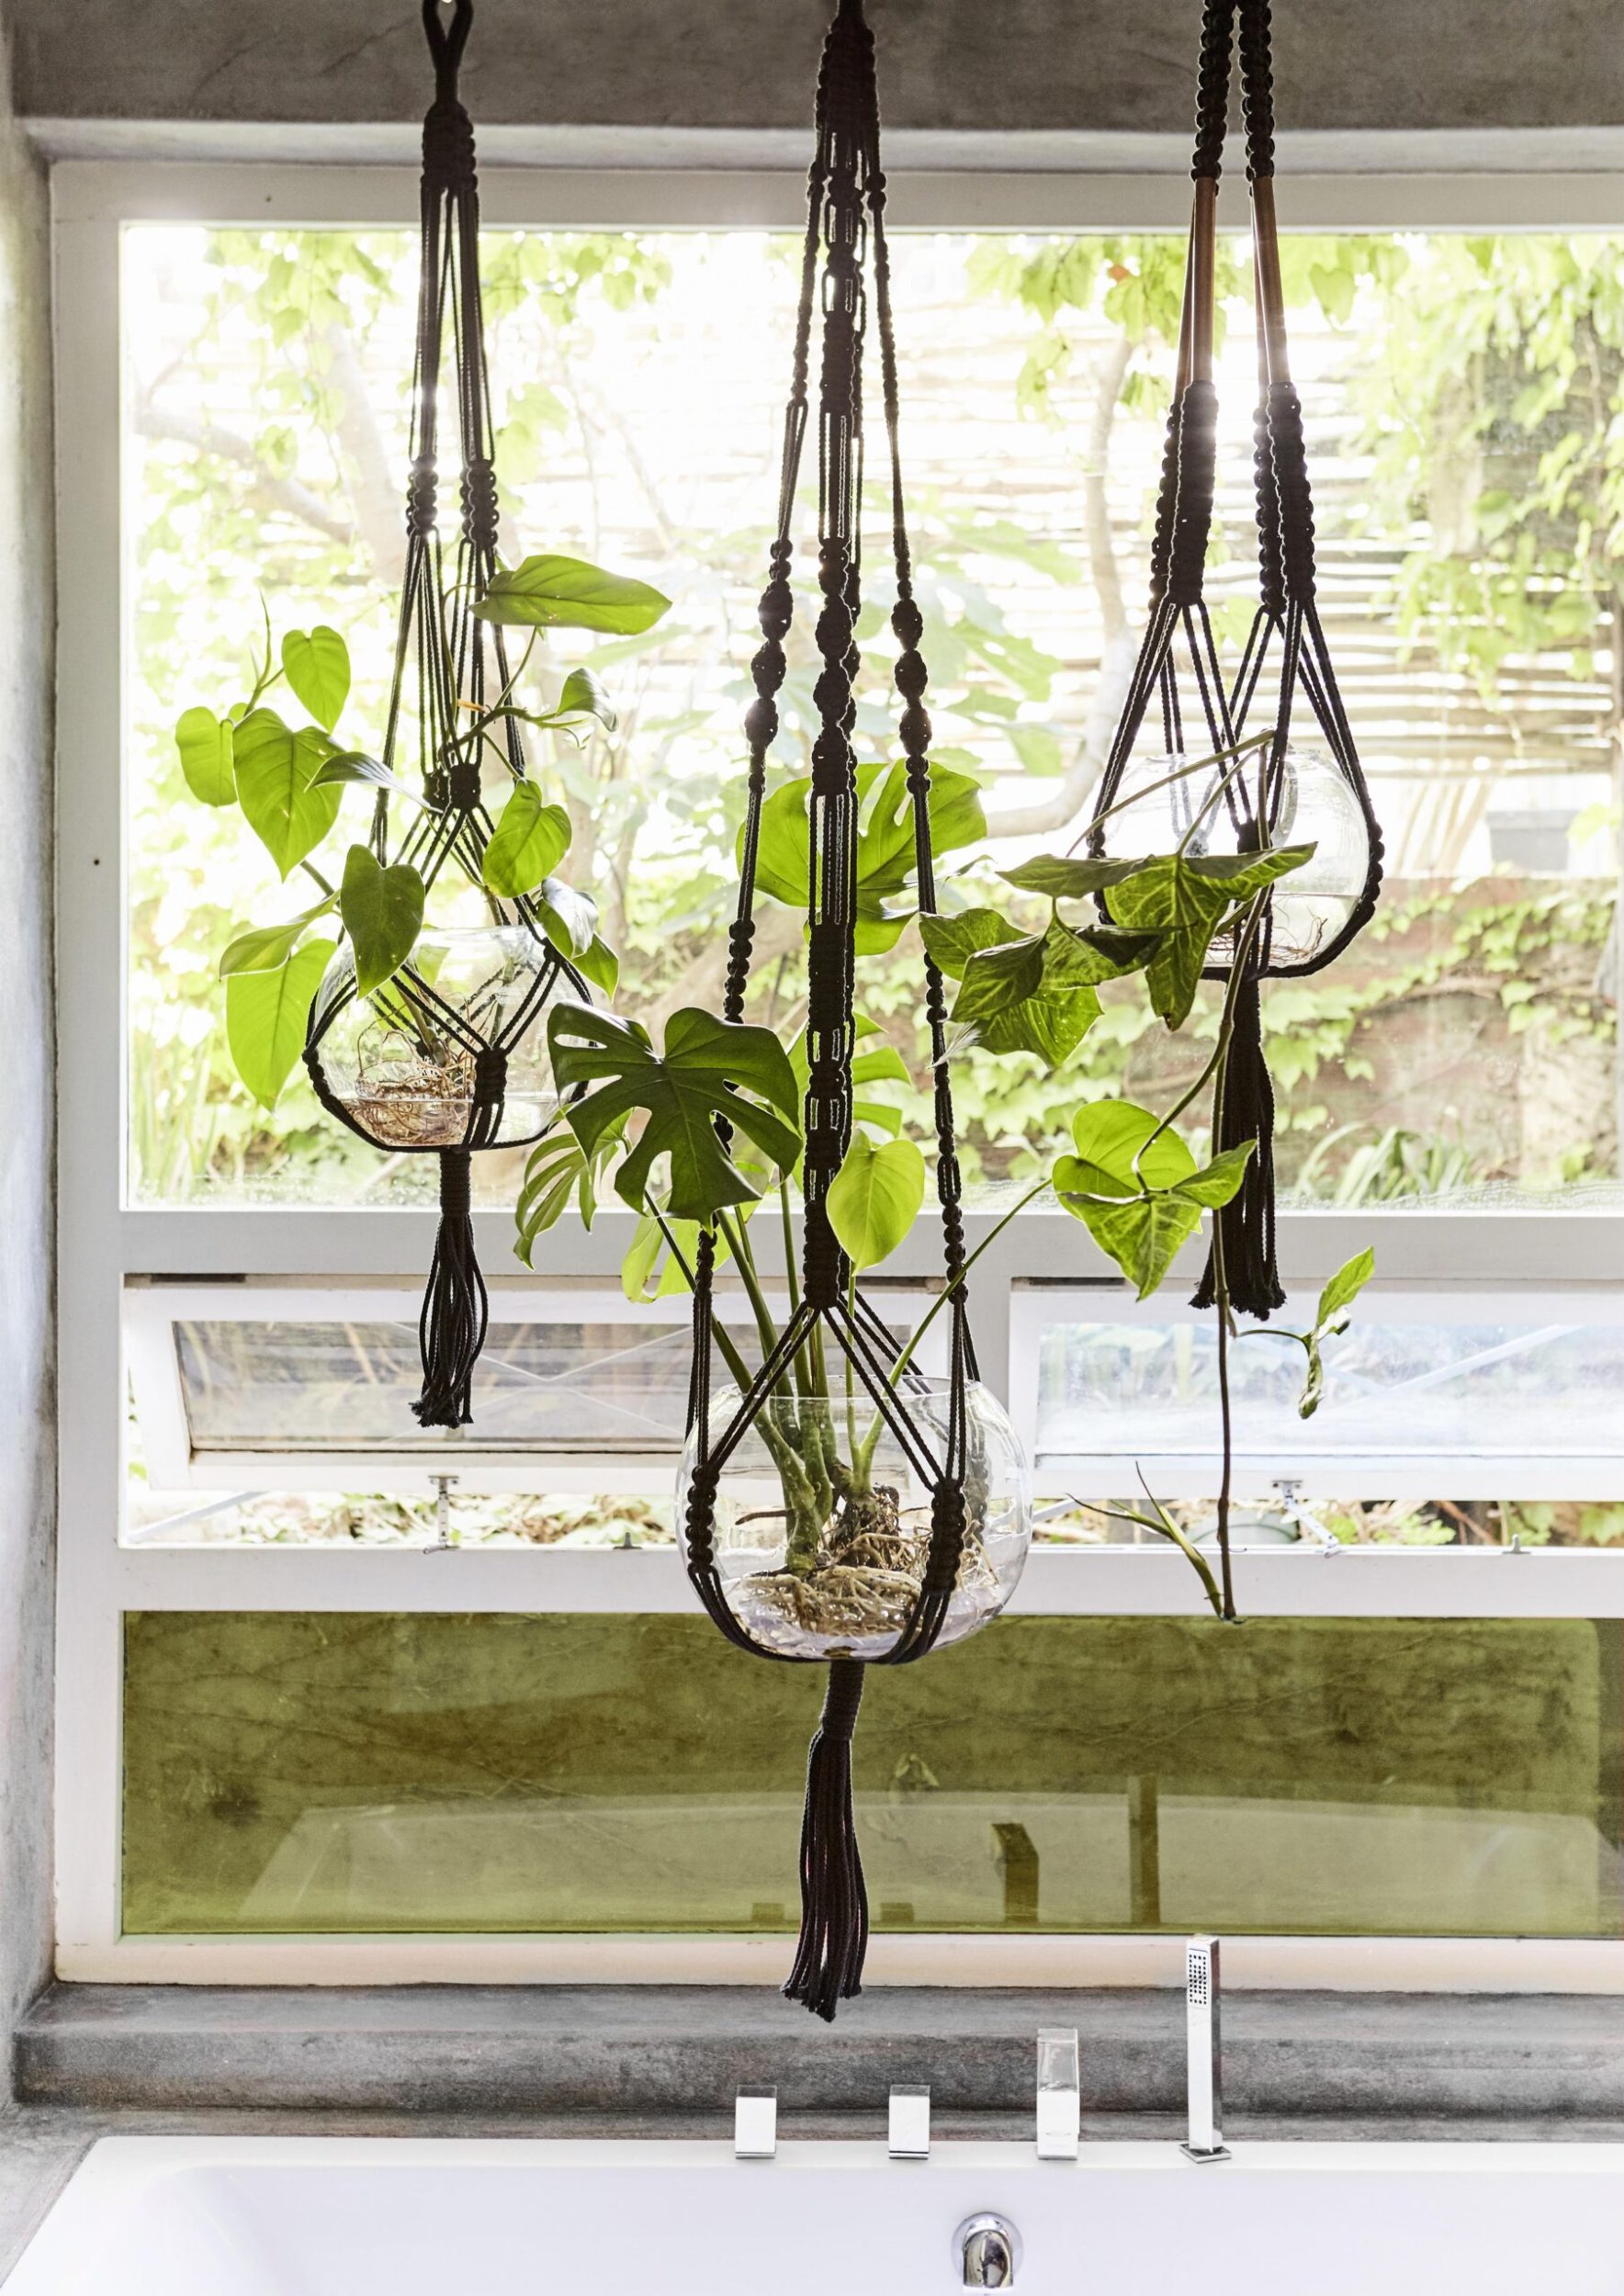 Three indoor plants in hanging from macramé baskets